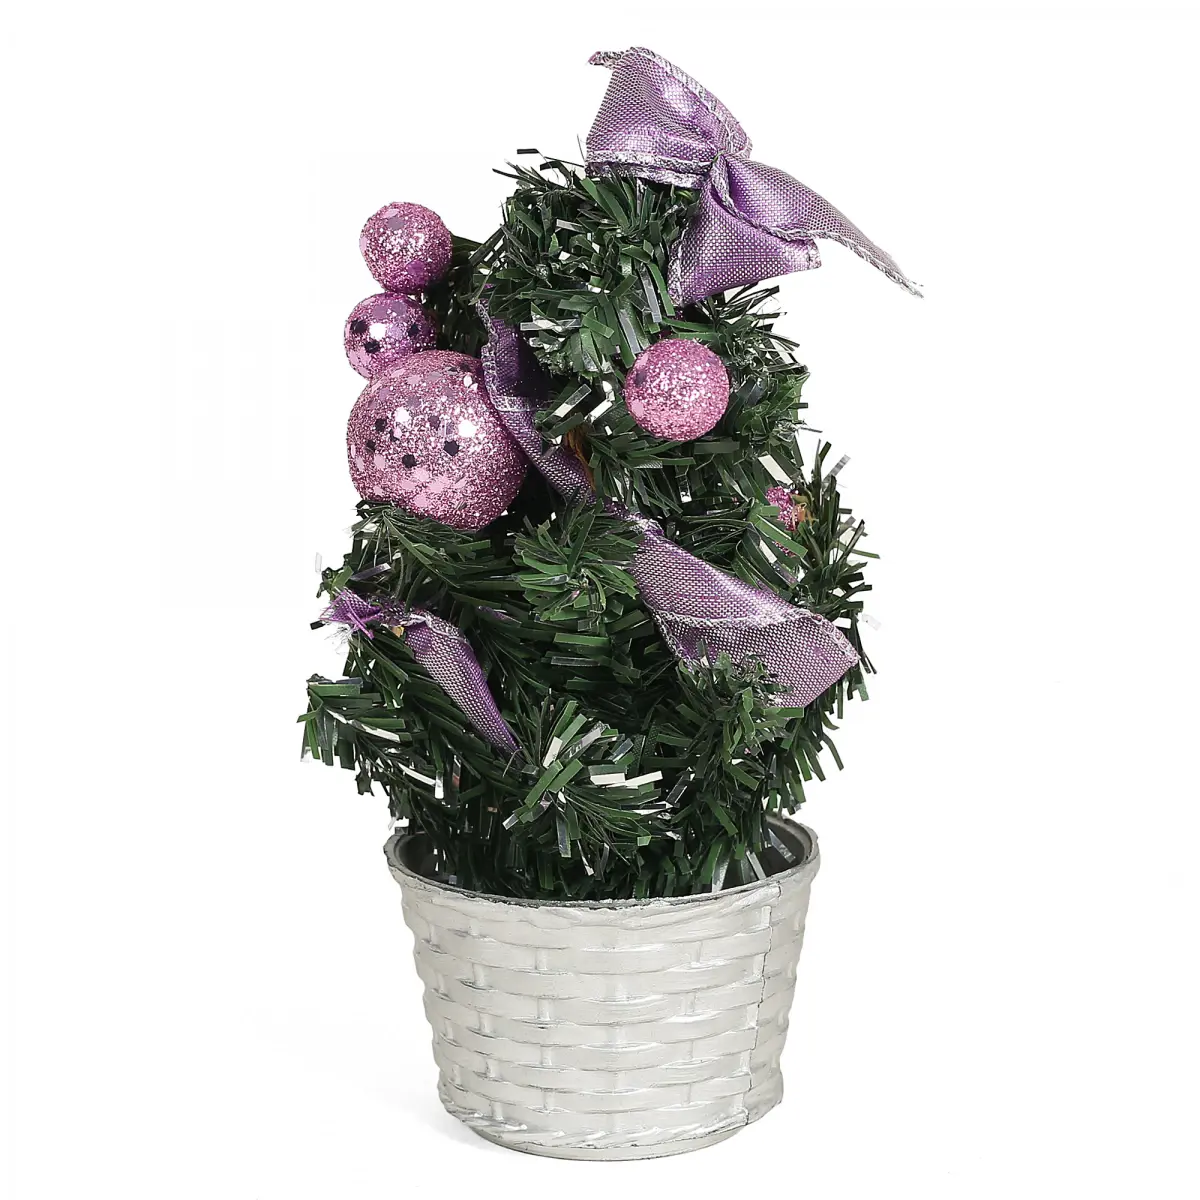 Boing Christmas Tree Decorations, 20cm, Purple